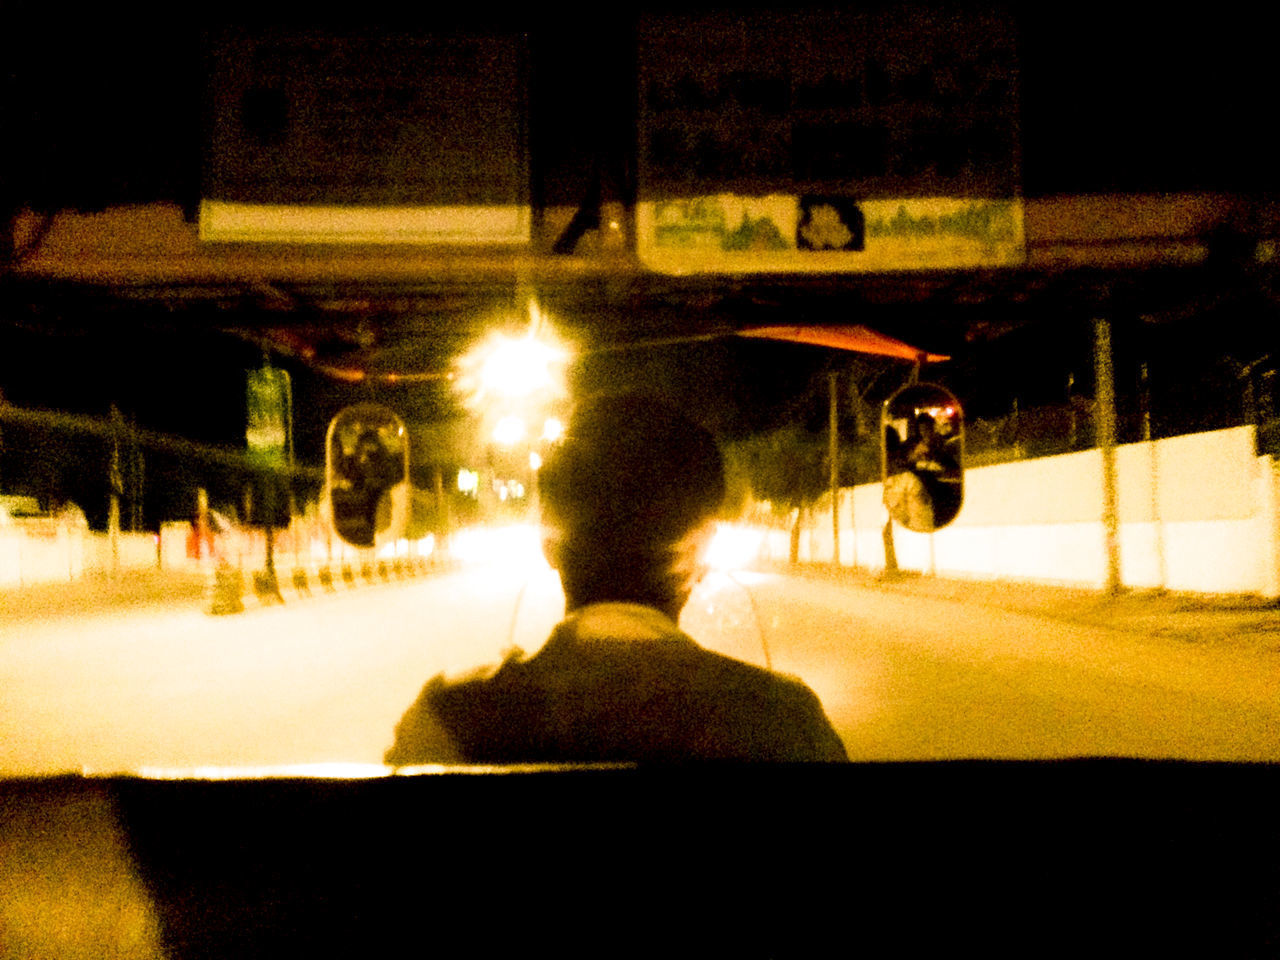 REAR VIEW PORTRAIT OF MAN ON ILLUMINATED STREET AT NIGHT